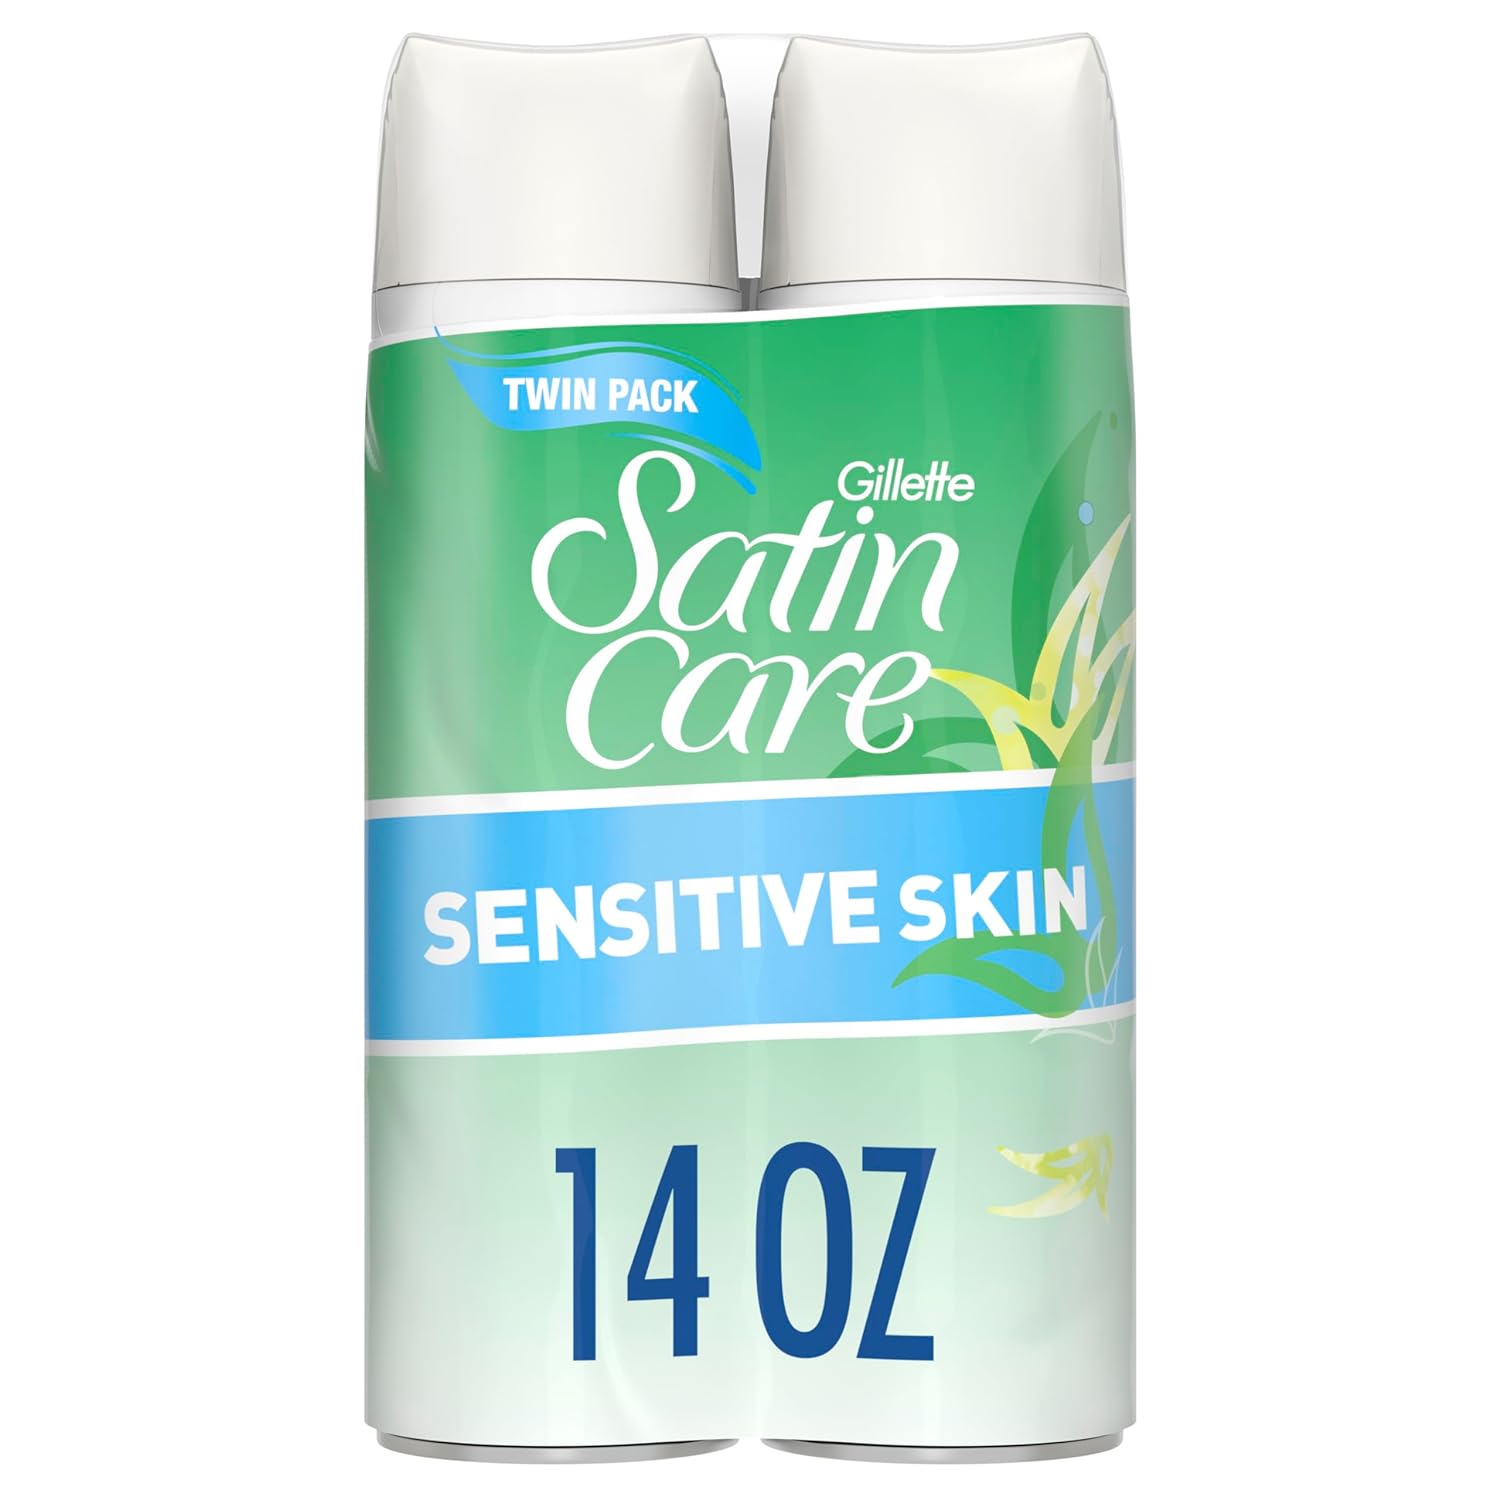 Gillette Venus Satin Care Sensitive Skin Shave Gel for Women 7 ounce, 2 count